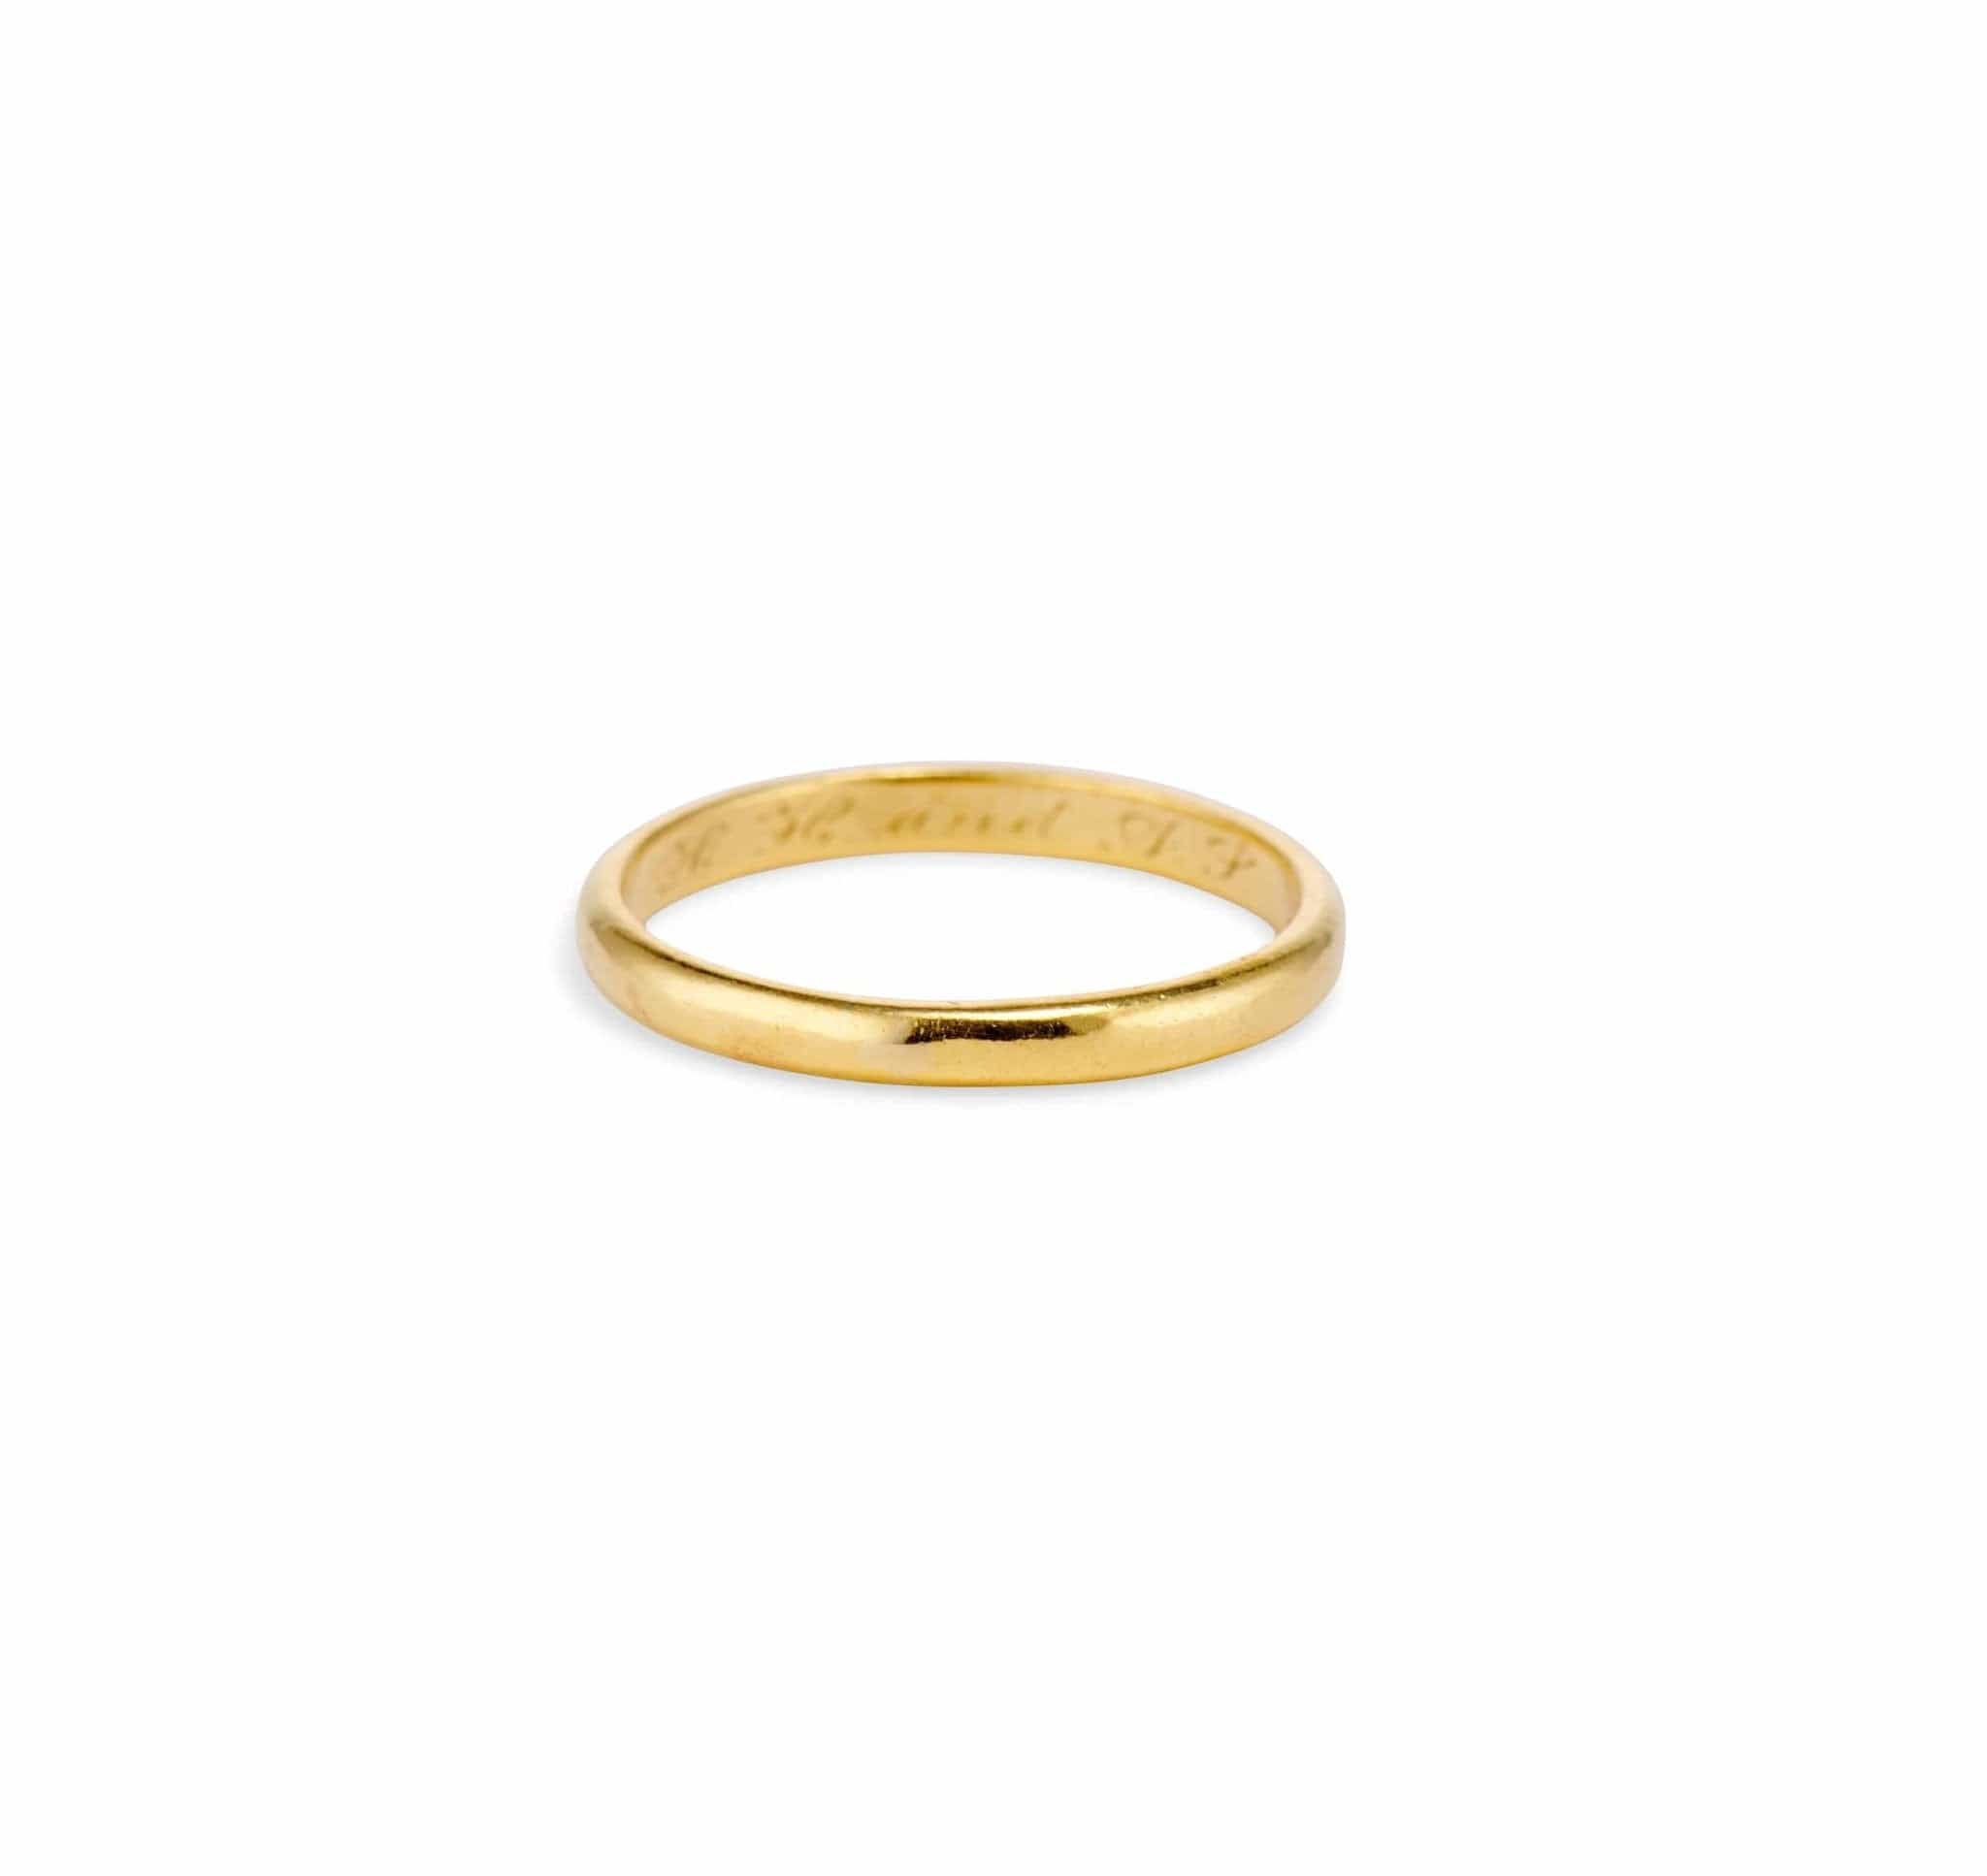 22K Gold Wedding Band Ring For Men - 235-GR6930 in 5.950 Grams